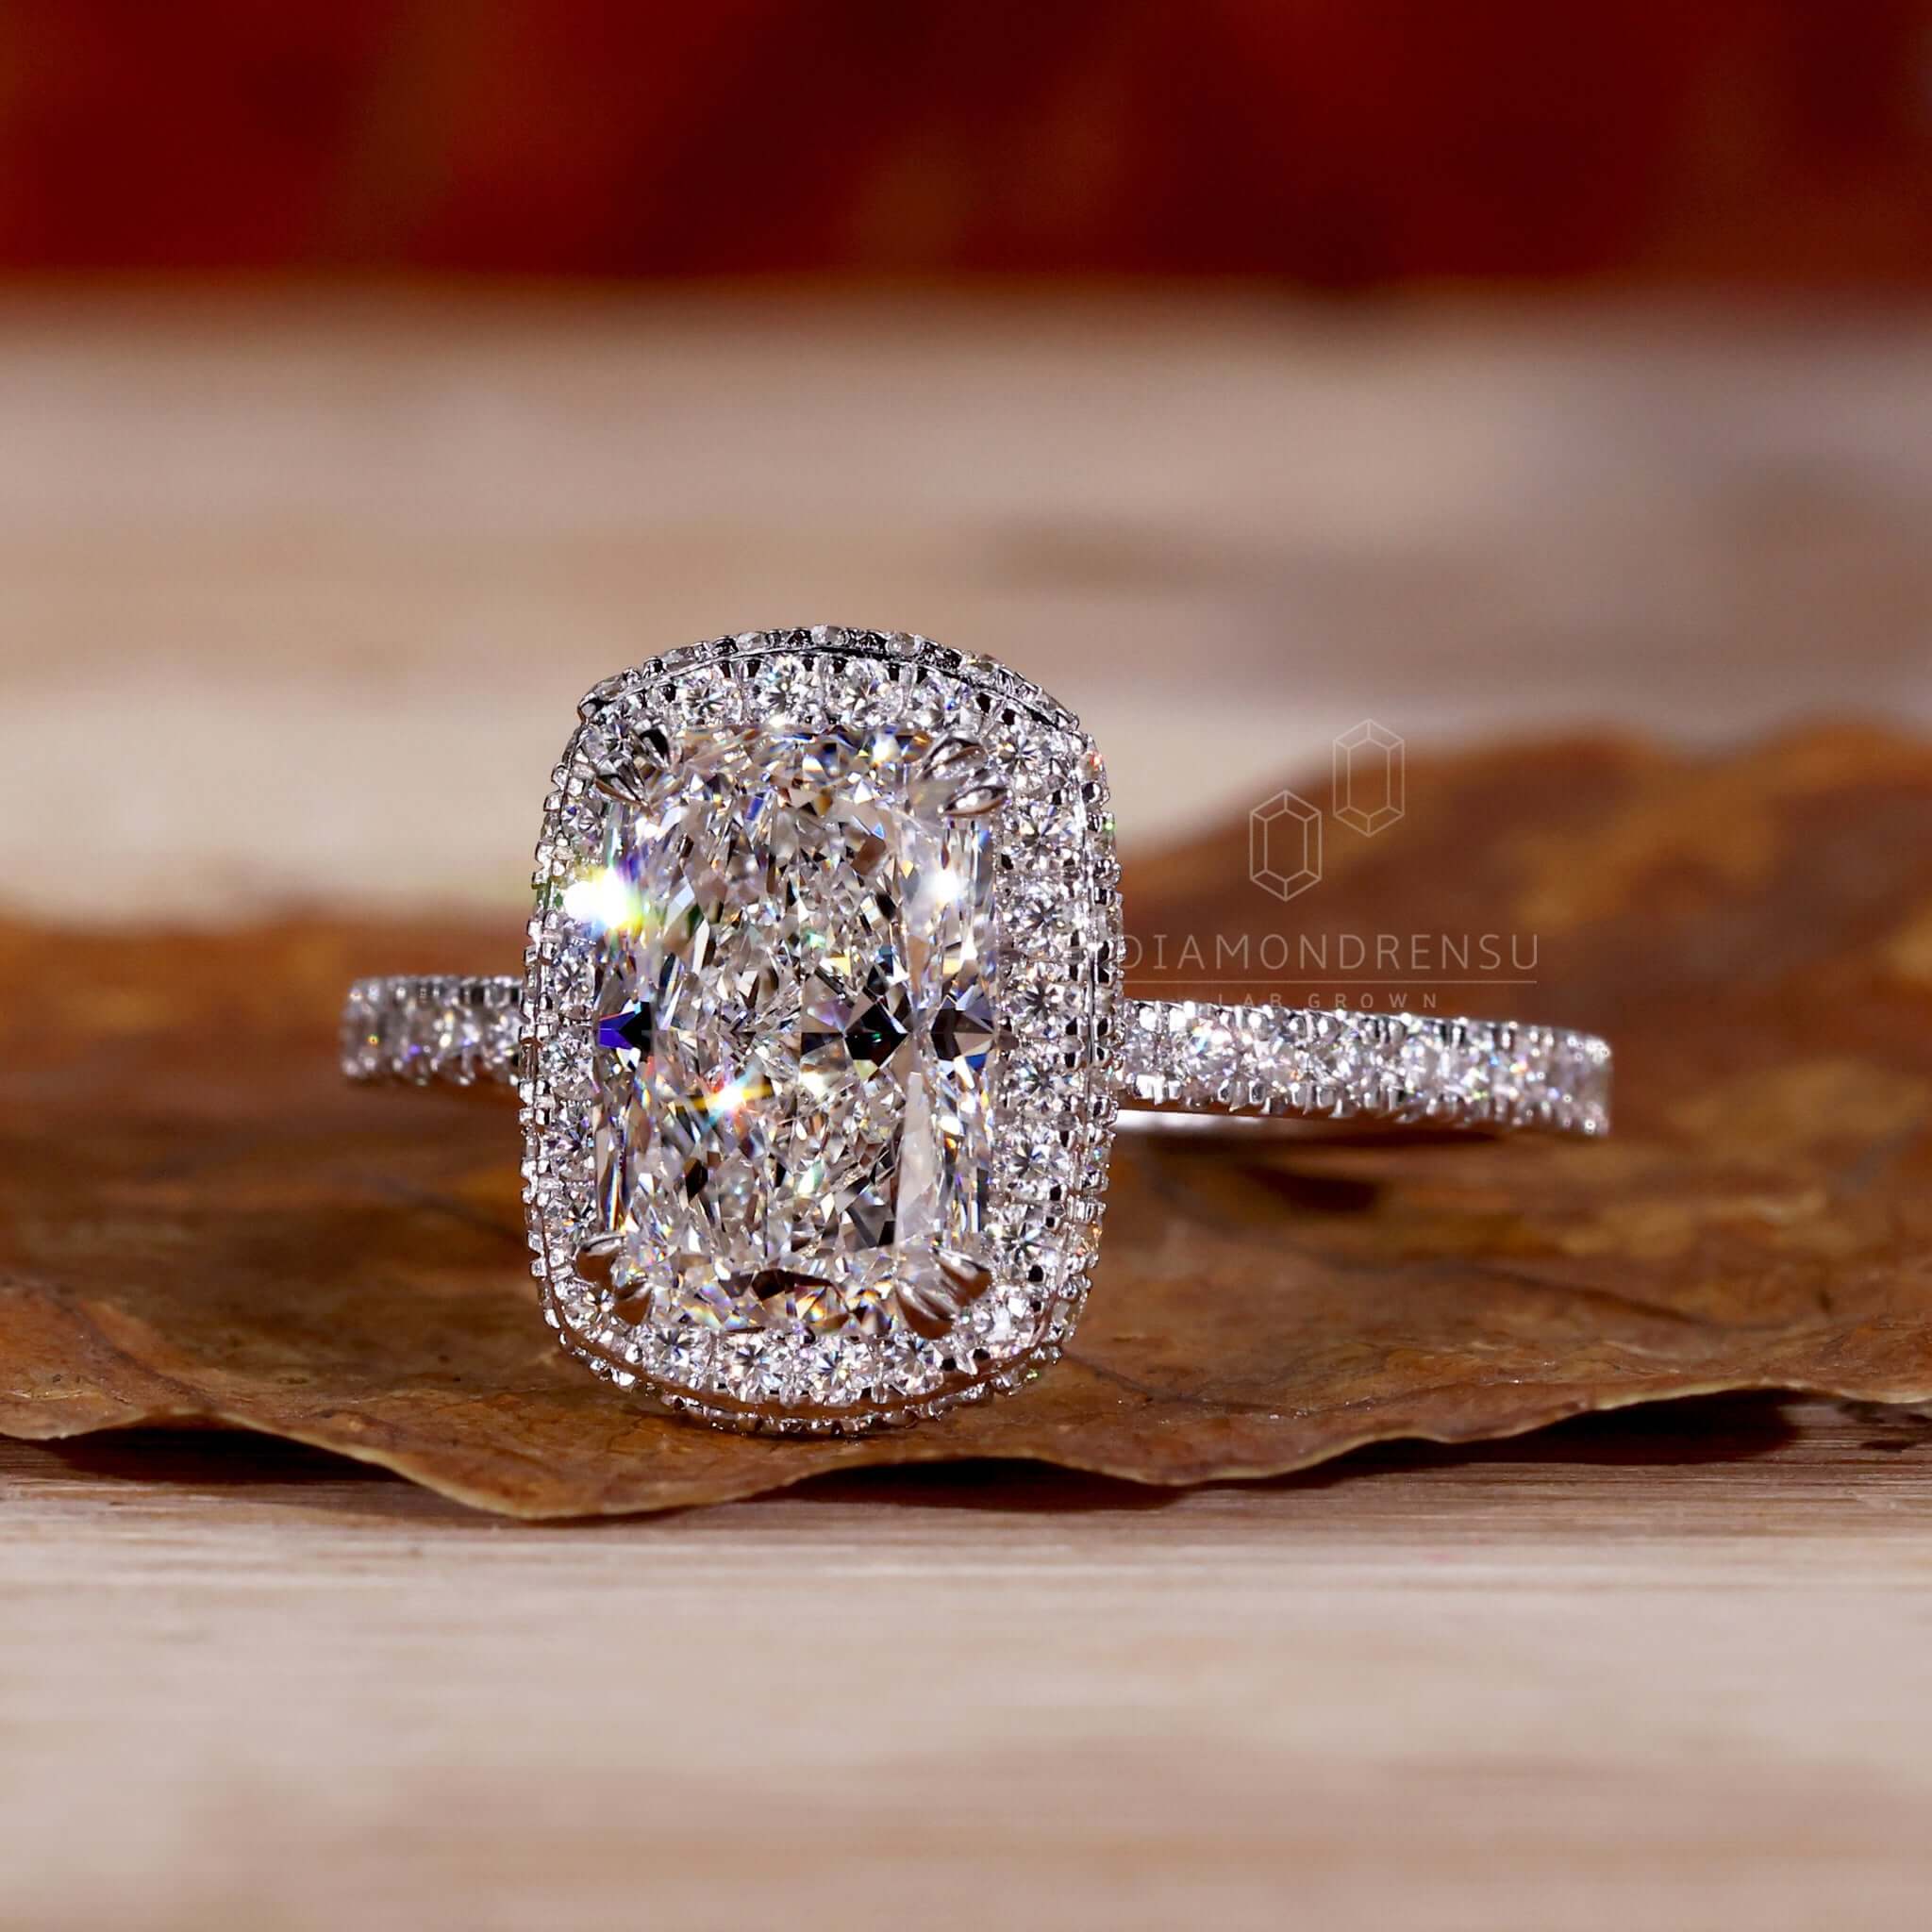 Large Round-Cut Diamond Ring with Hidden Halo - Diamonds By Raymond Lee